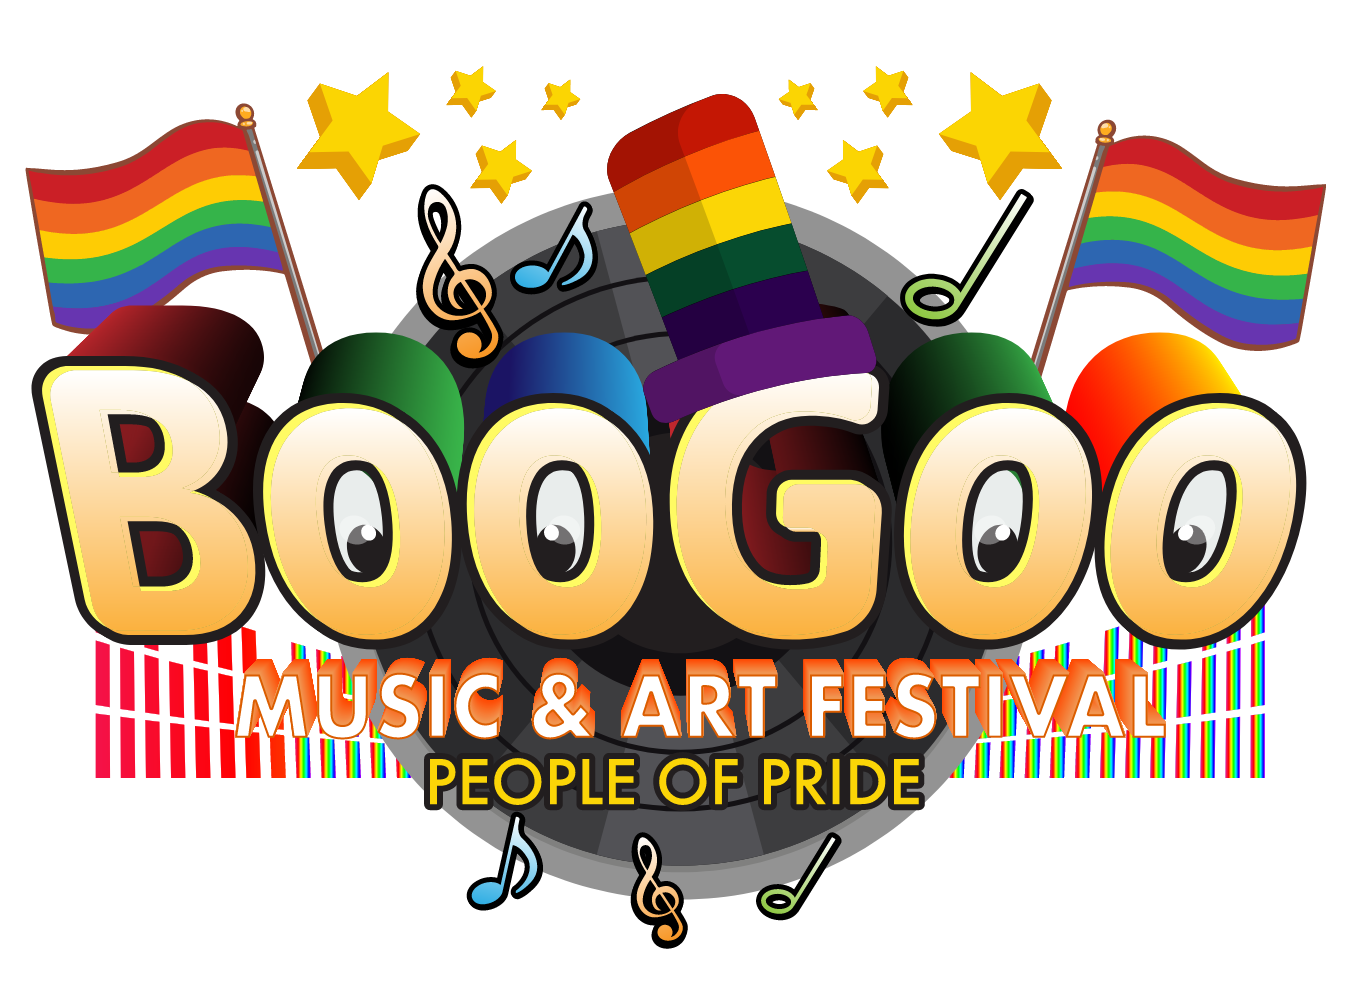 BooGoo Music & Art Festival